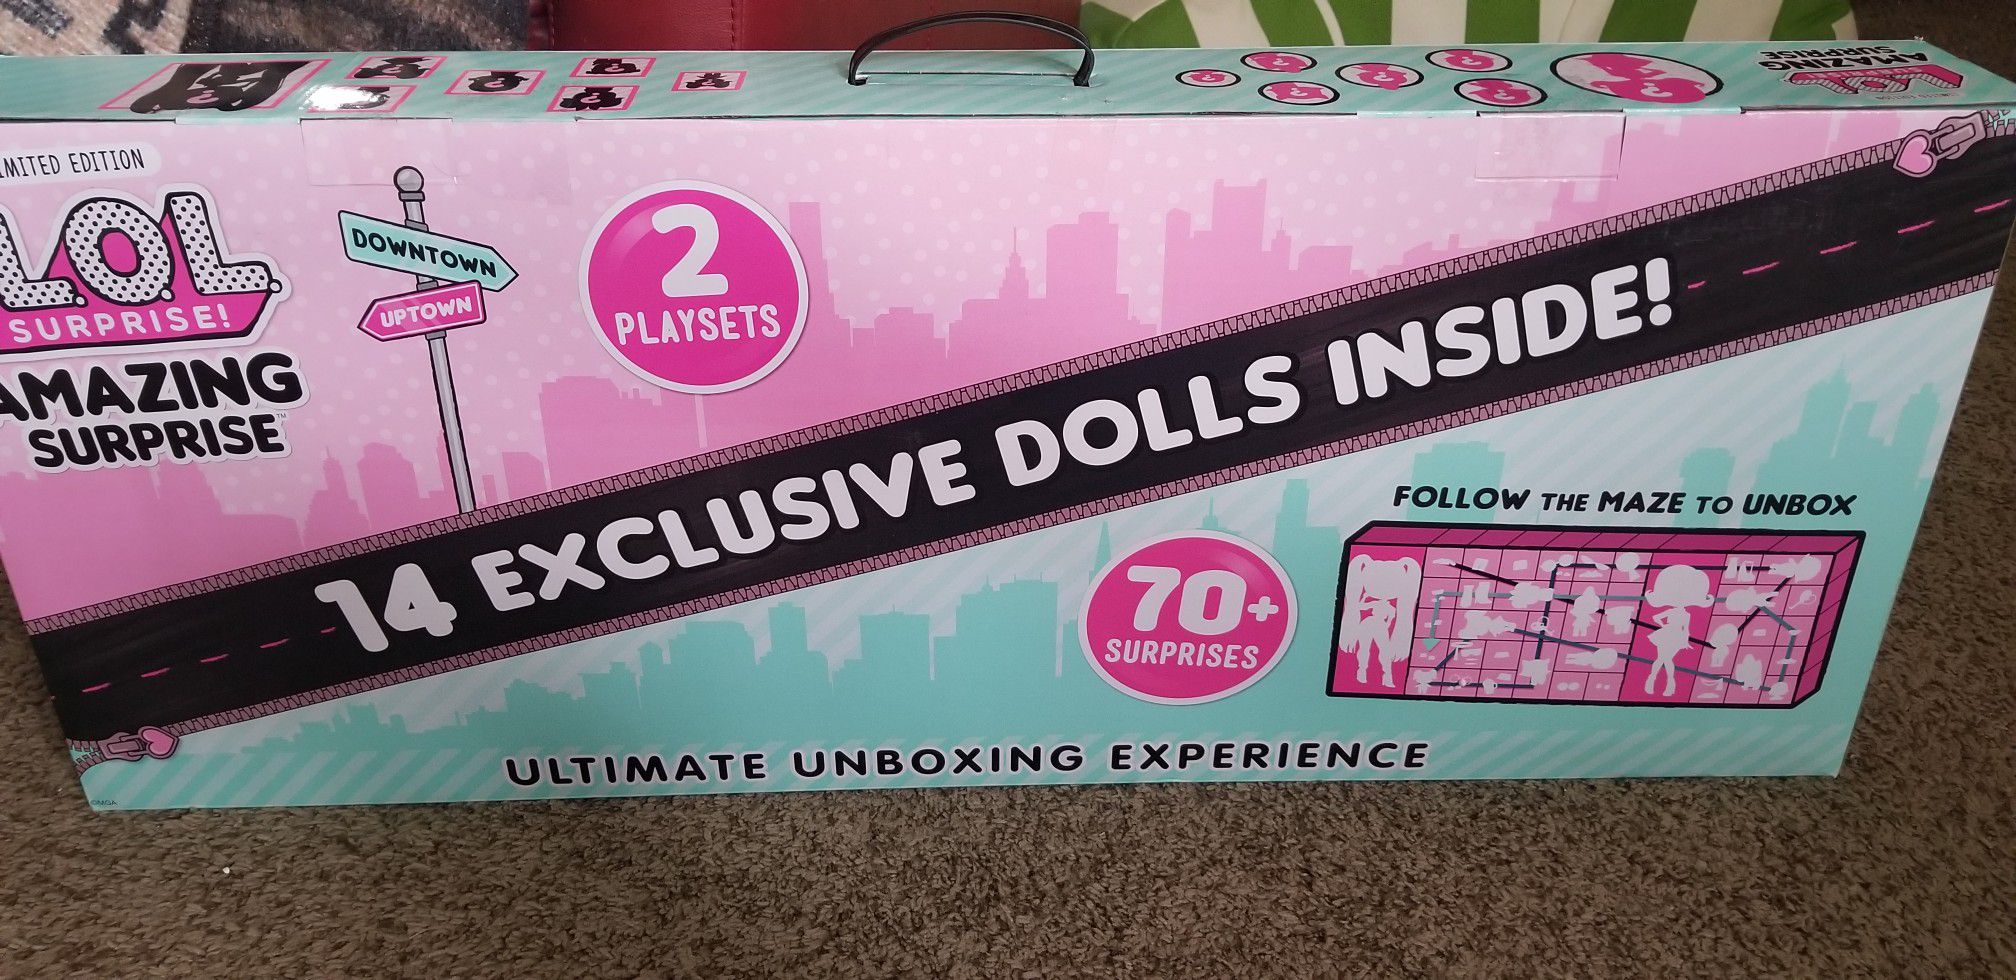 LOL Suprise Amazing Surprise with 14 Dolls & 70+ Surprises